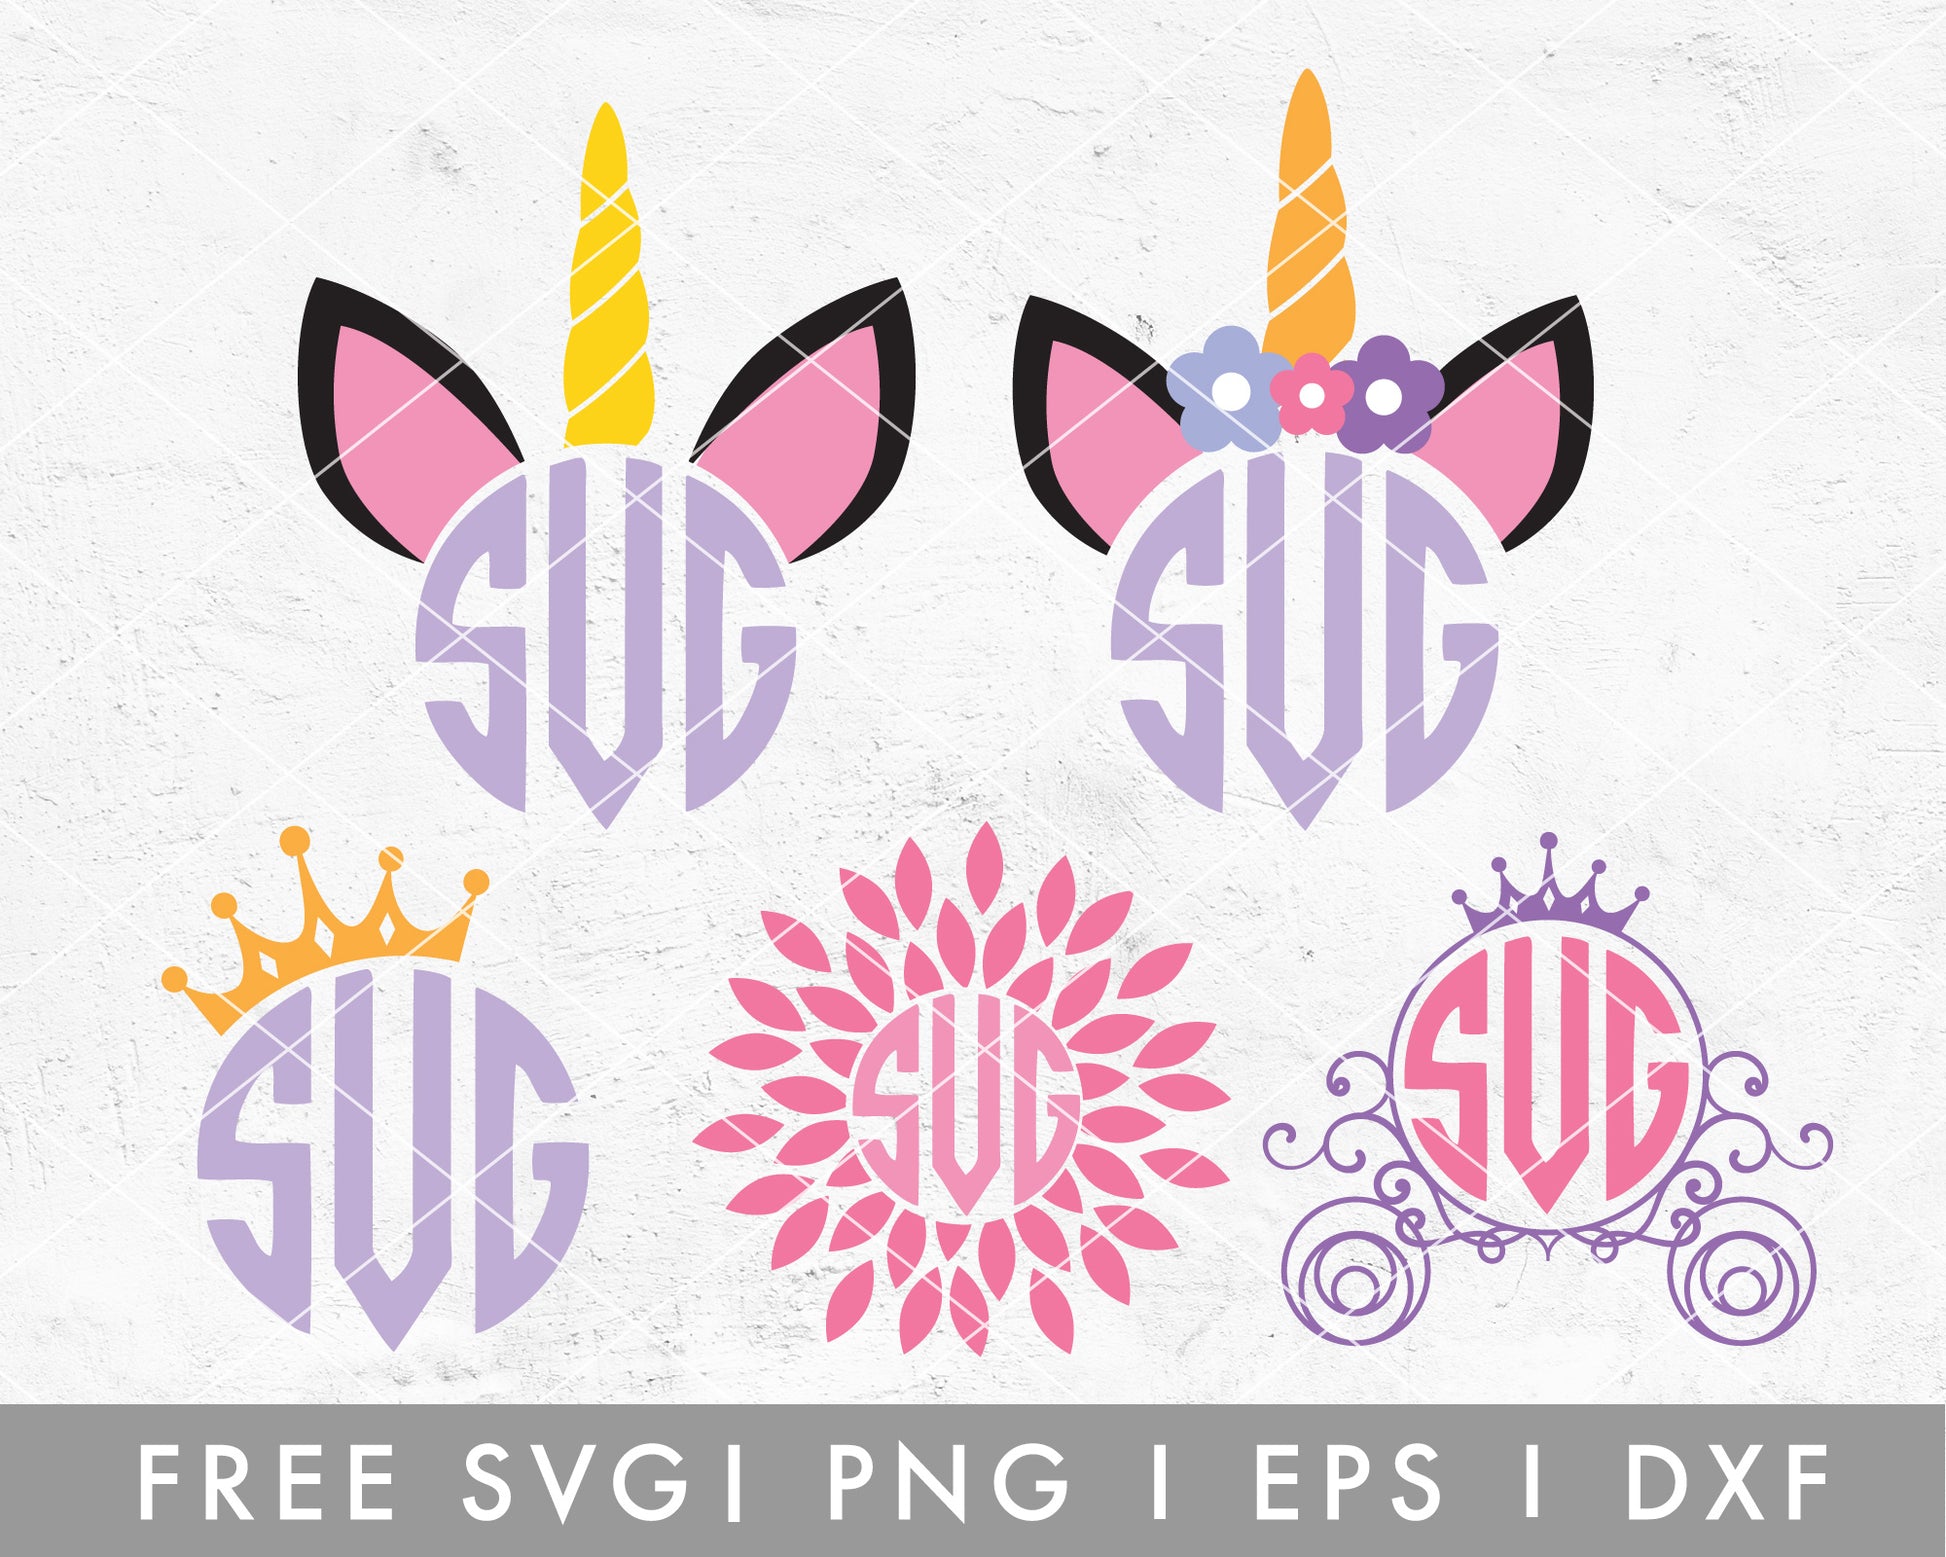 FREE FREE Unicorn SVG | Unicorn Monogram SVG Cut File for Cricut, Cameo Silhouette | Free SVG Cut File